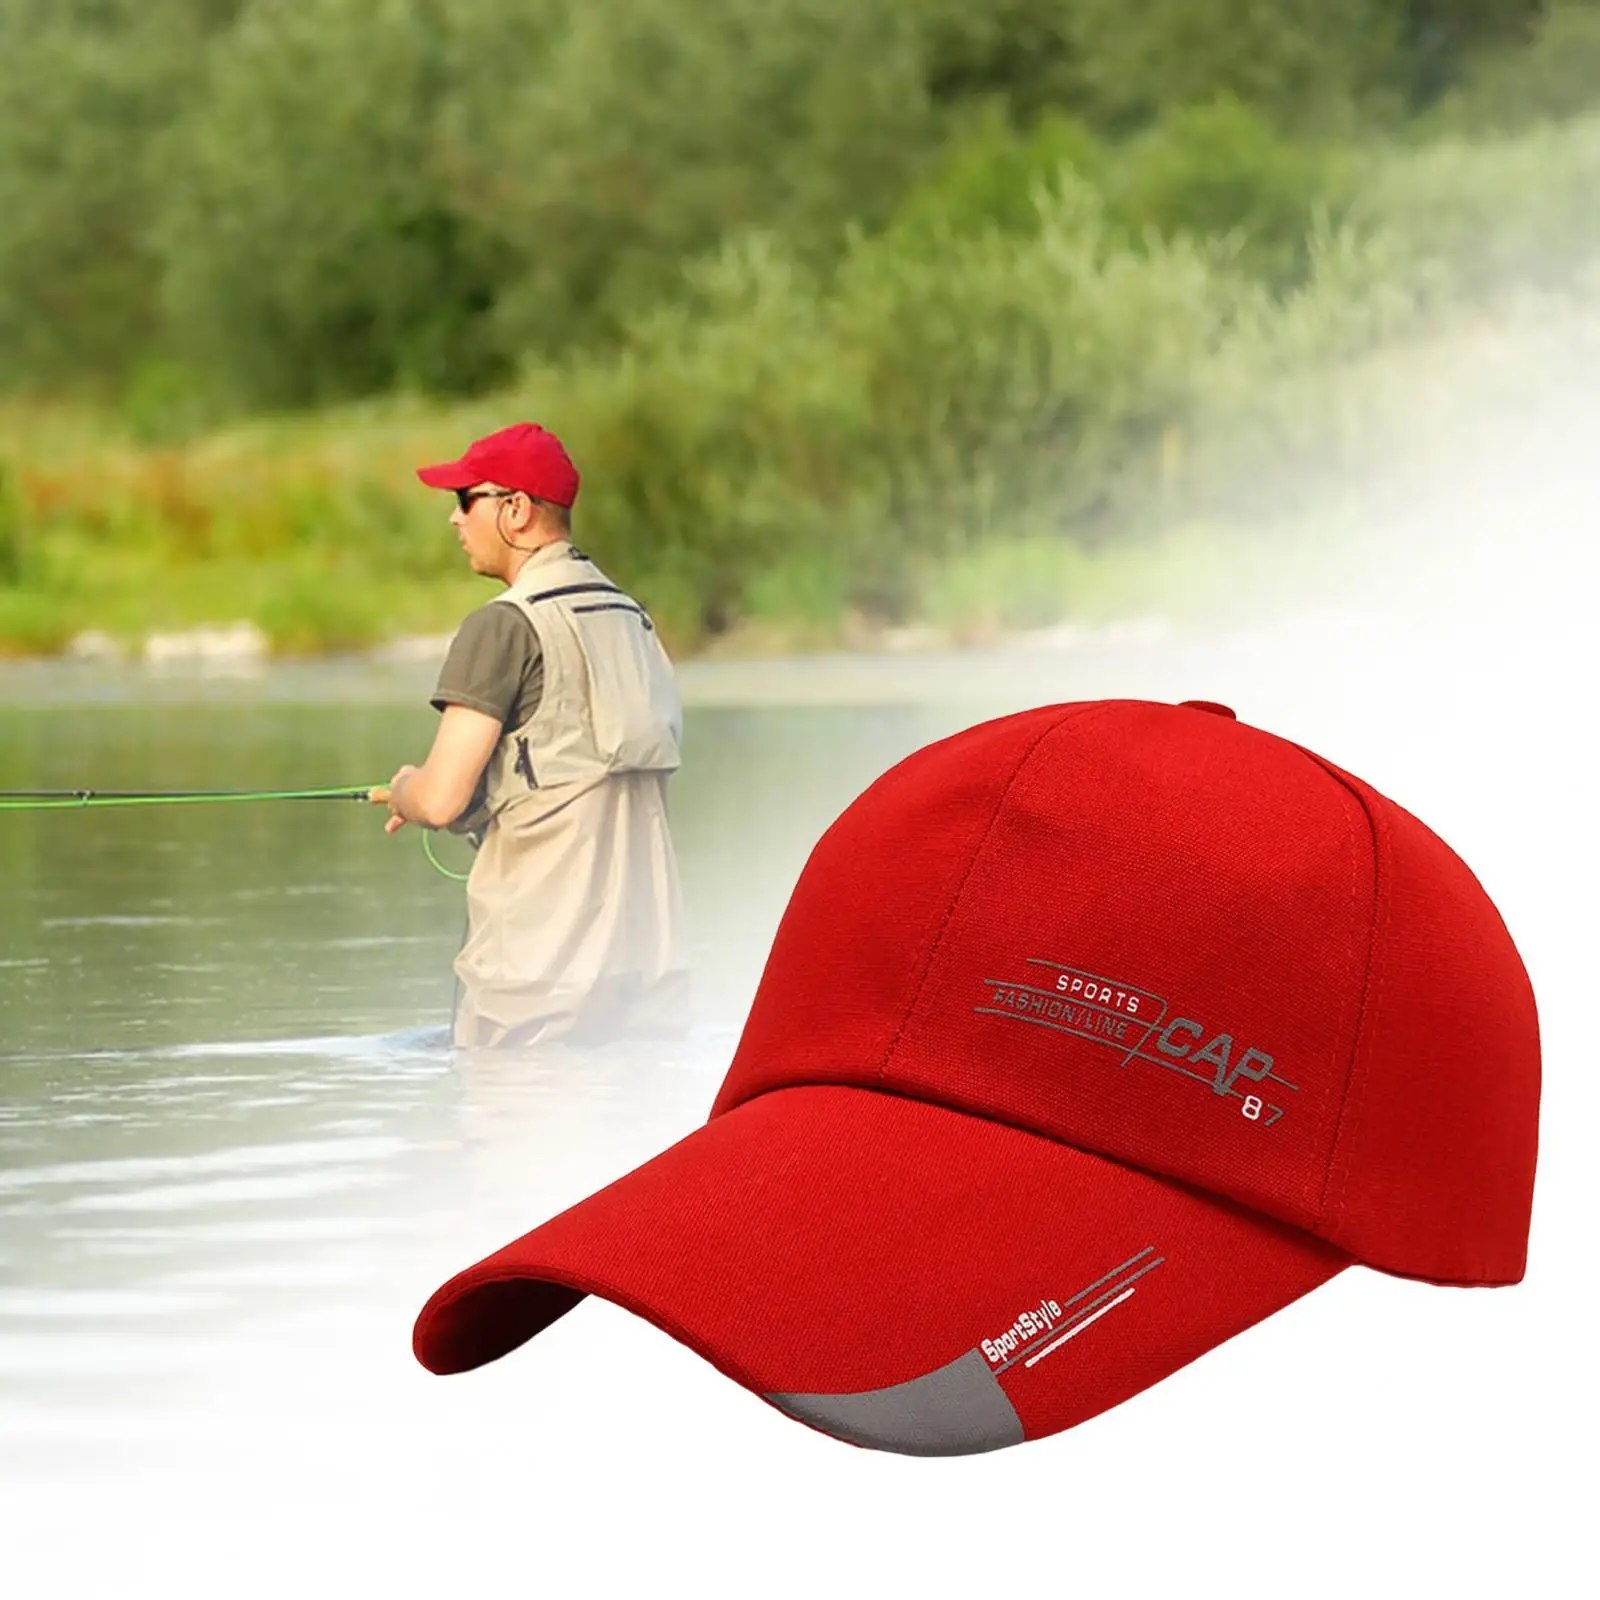 Baseball Hat Baseball Cap Adjustable Size Golf Hat for Running Camping Beach